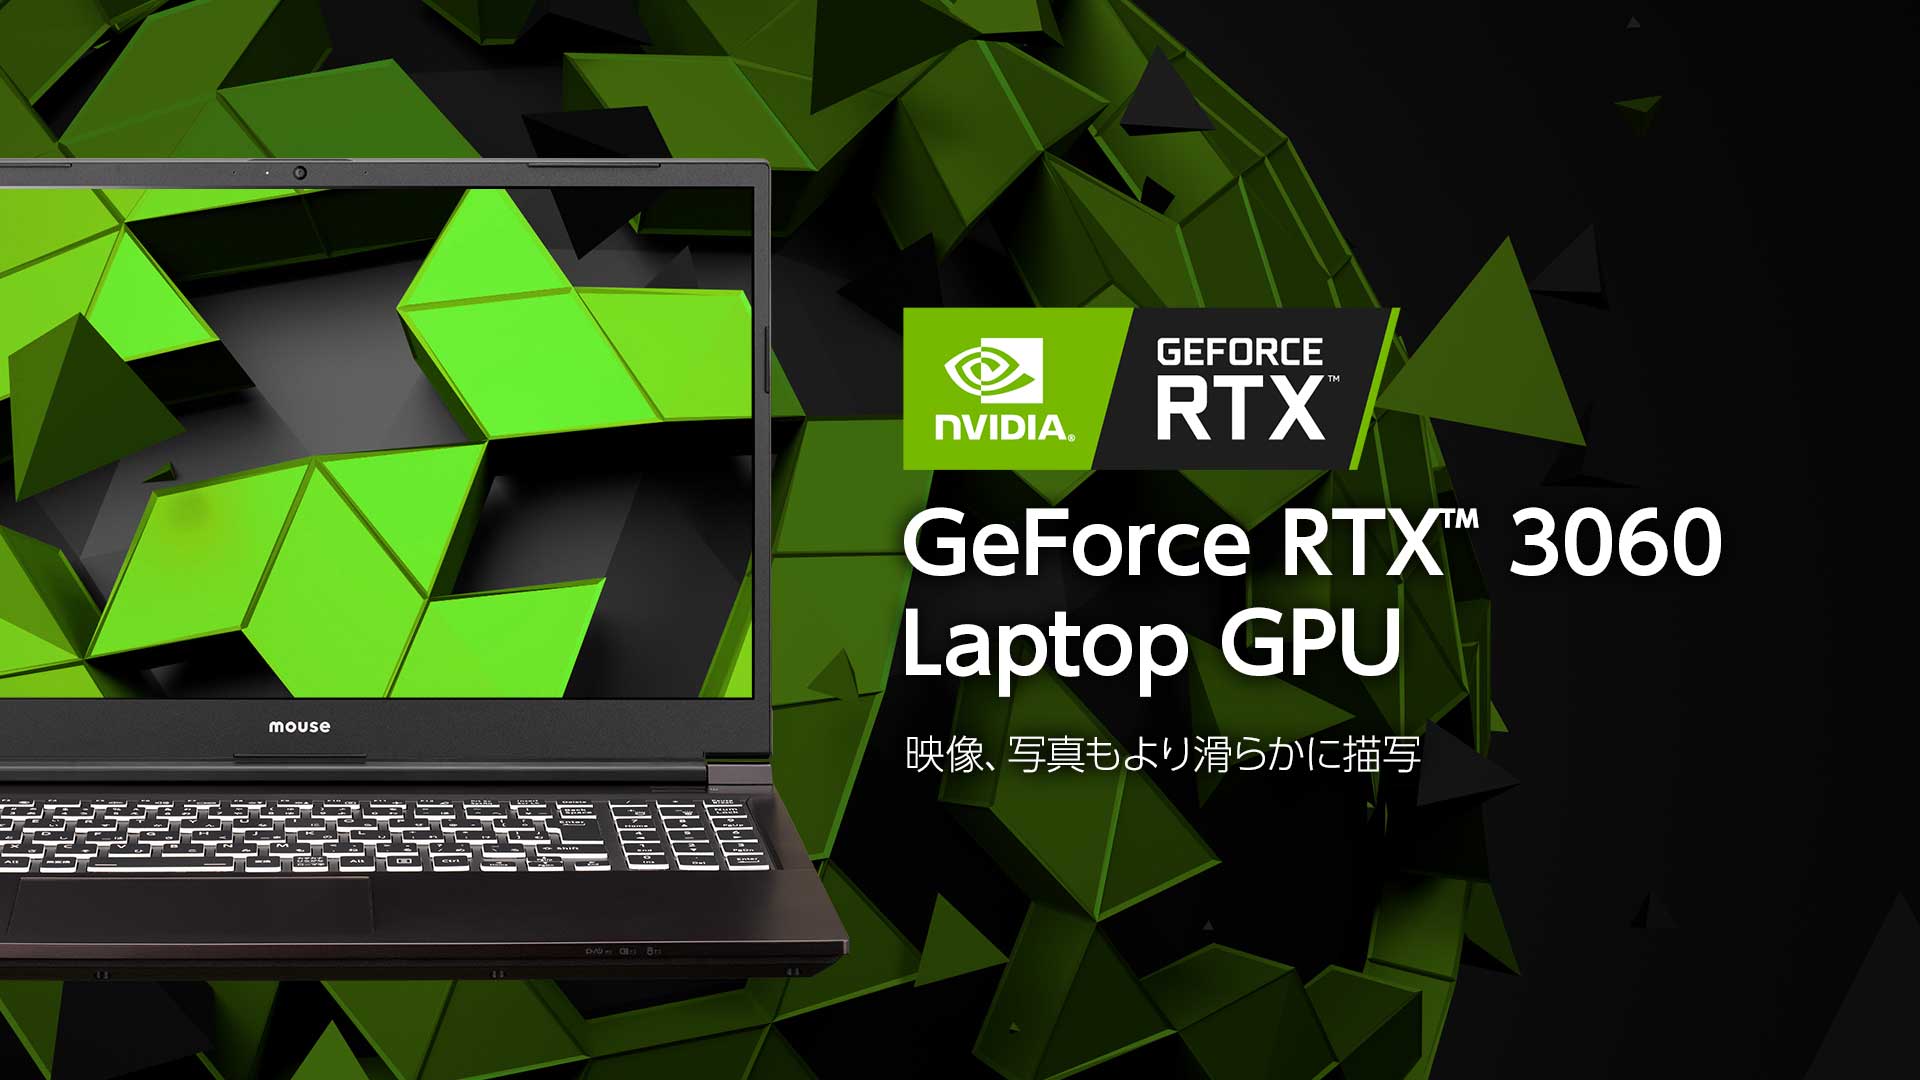 NVIDIA GeForce rtx 3060 Laptop GPU